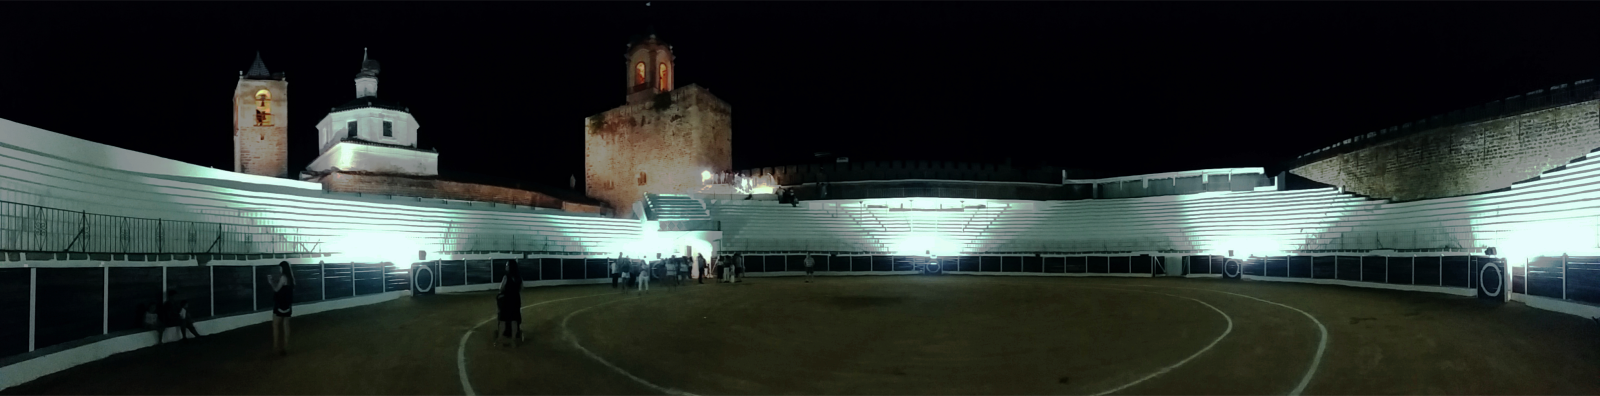 Noche en blanco. Interior Plaza de Toros de Fregenal de la Sierra, Badajoz